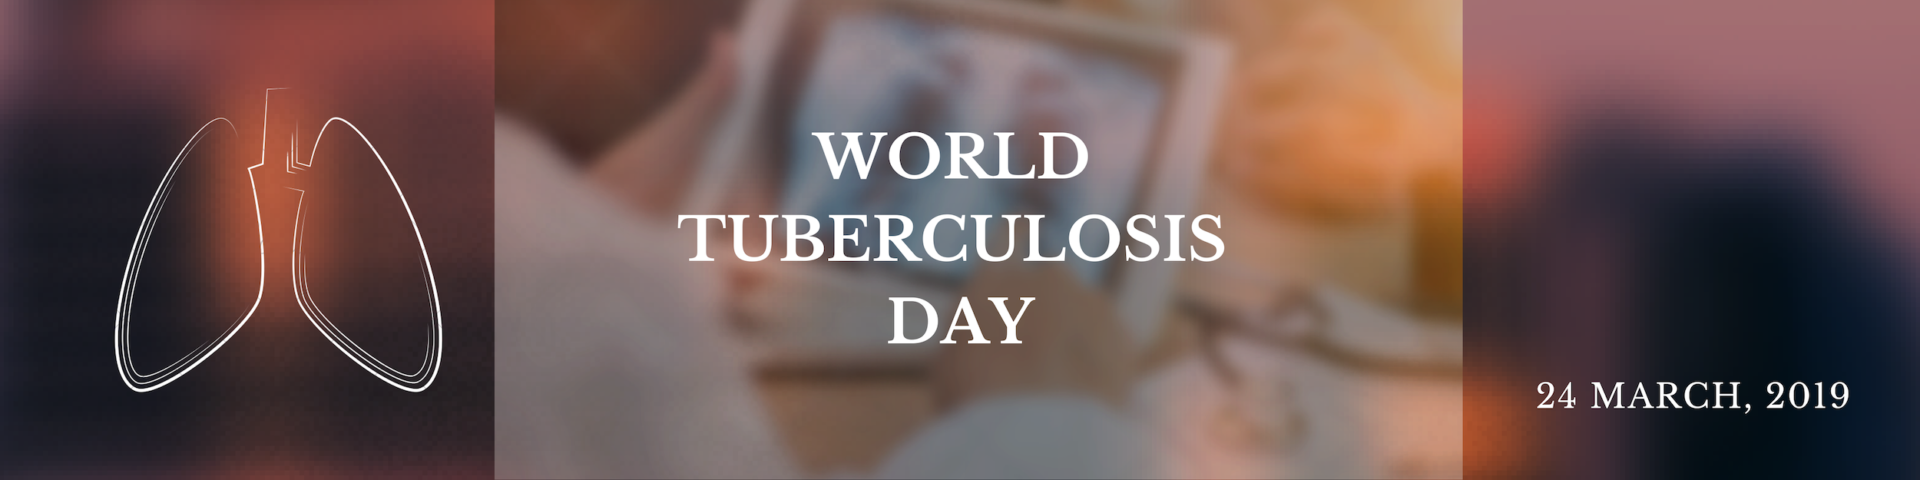 tuberculosis day